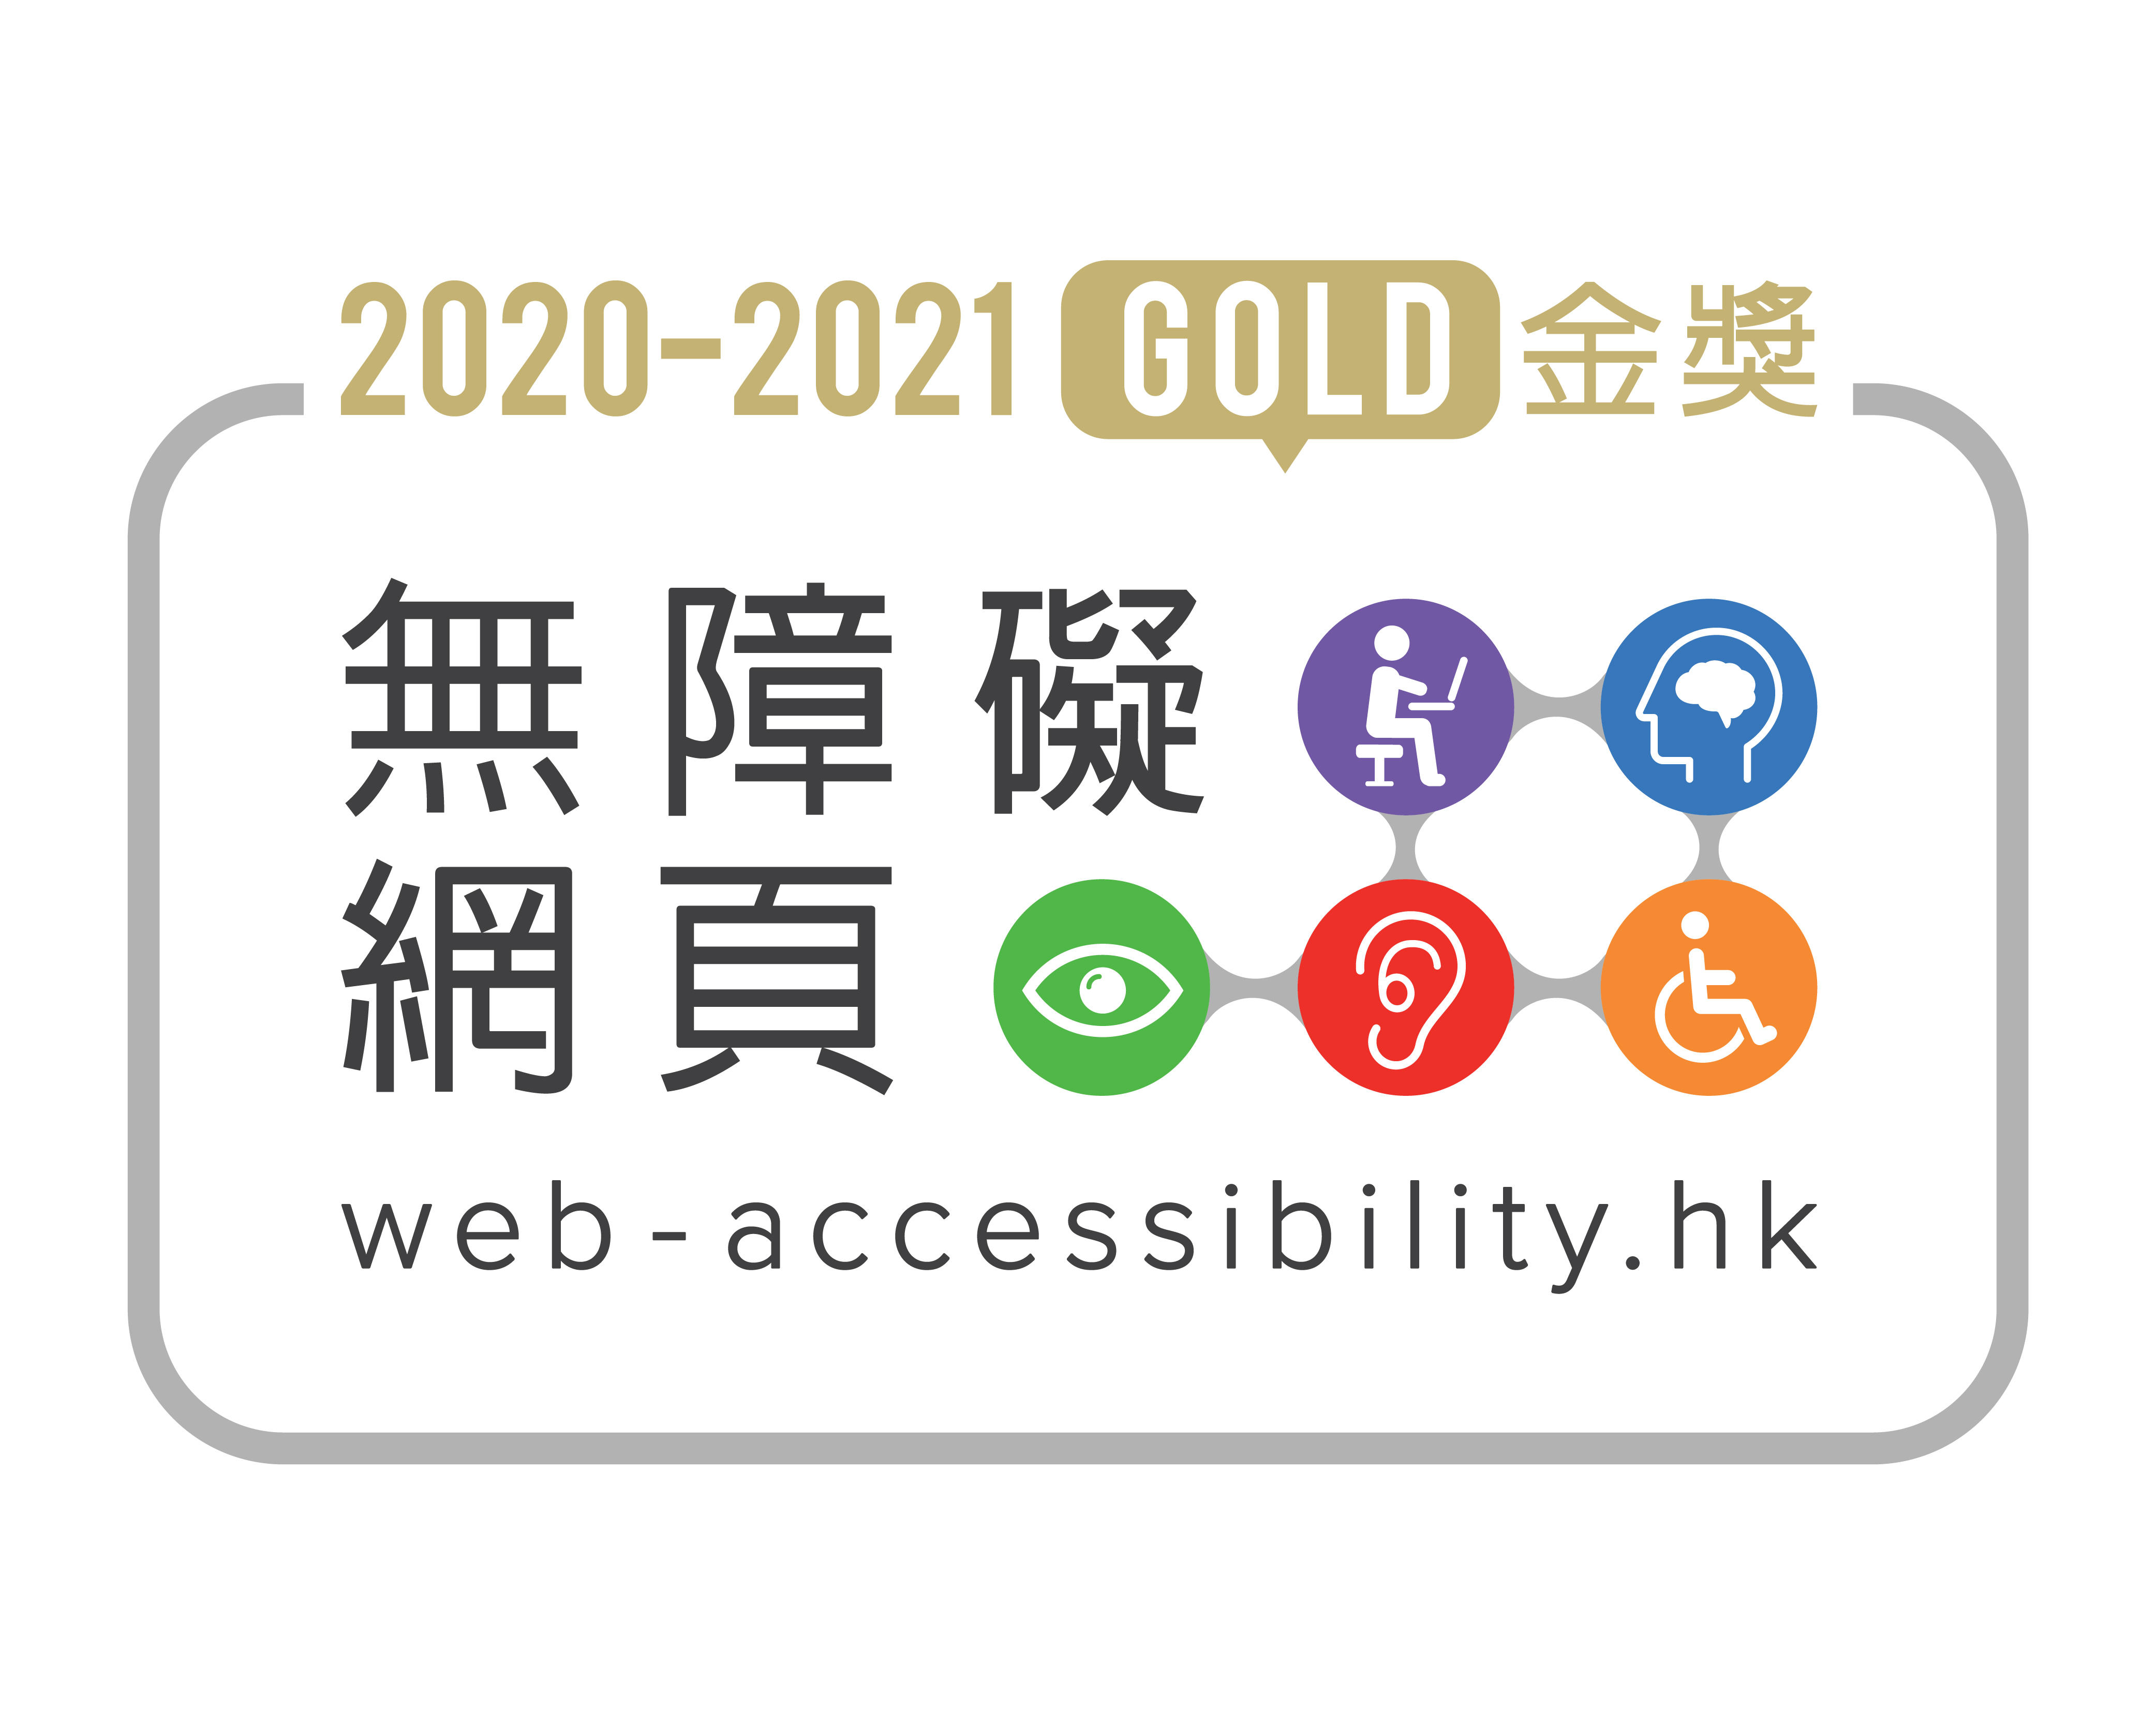 2020-2021 Web Accessibility Gold Award